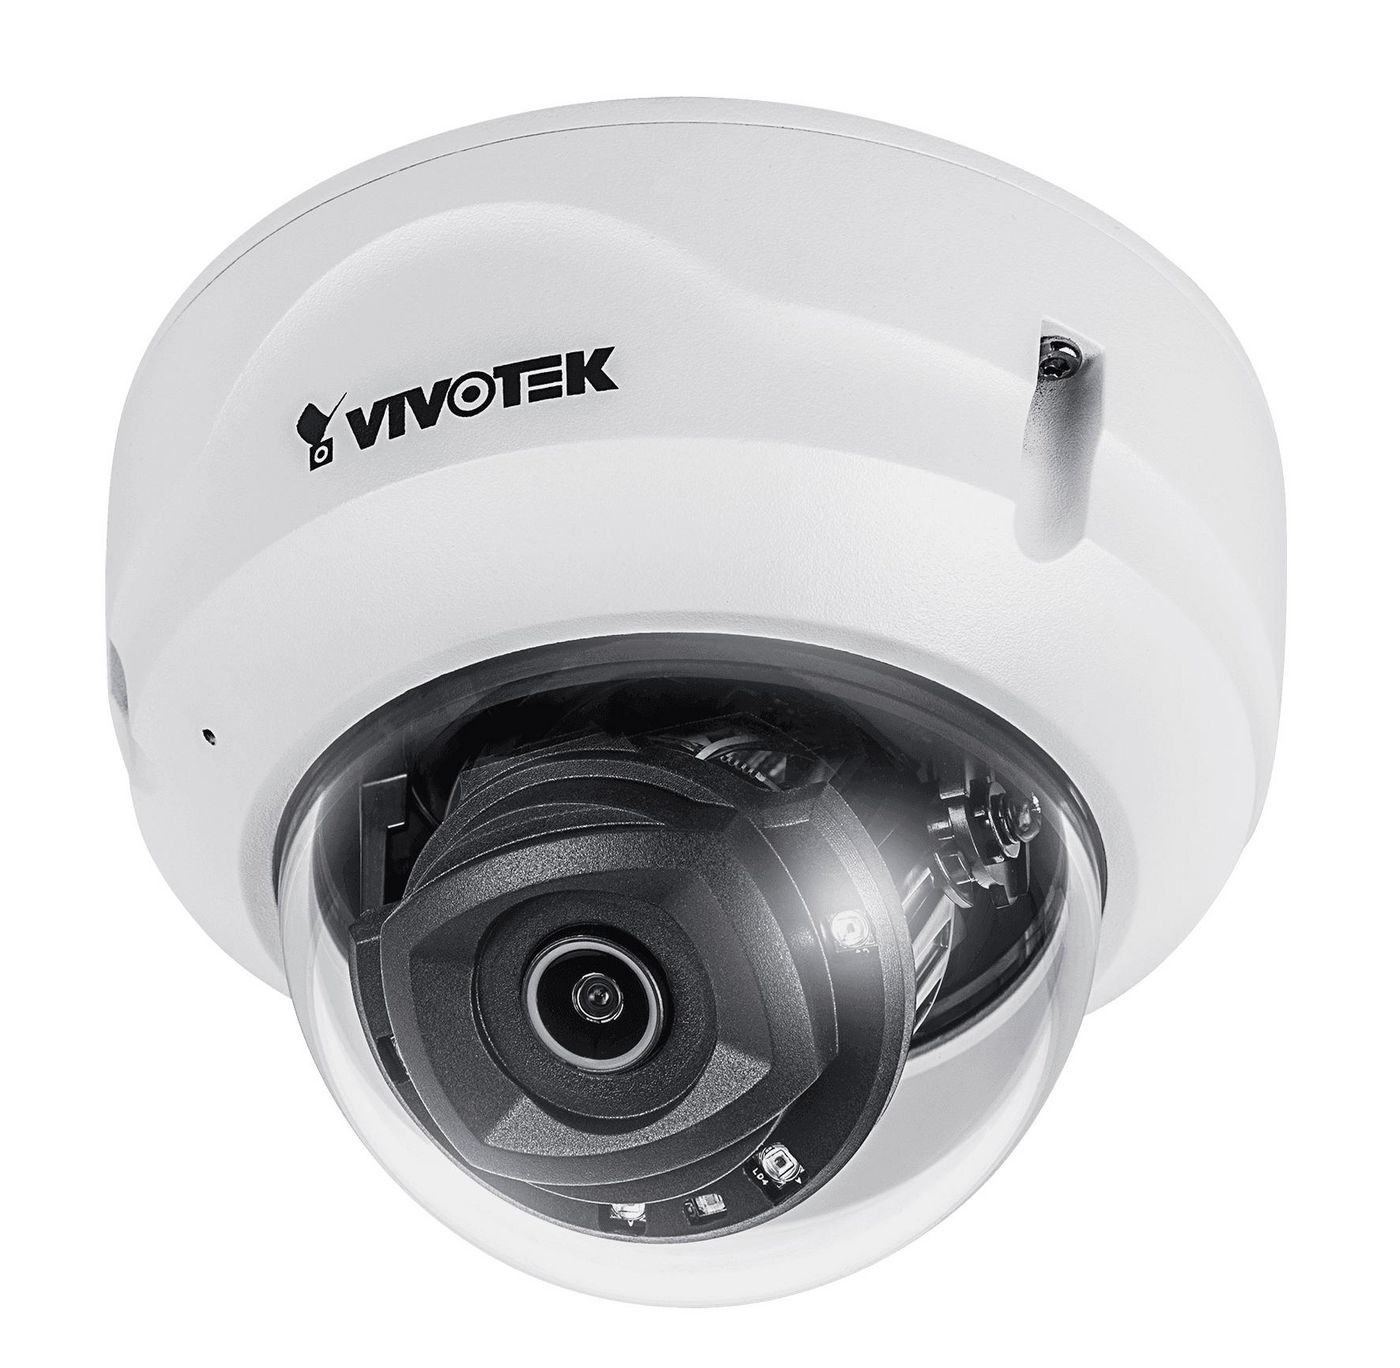 VIVOTEK FD9389-EHV-v2 Fixed Dome Network Camera 5MP H,265 WDR Pro Smart Stream III SNV